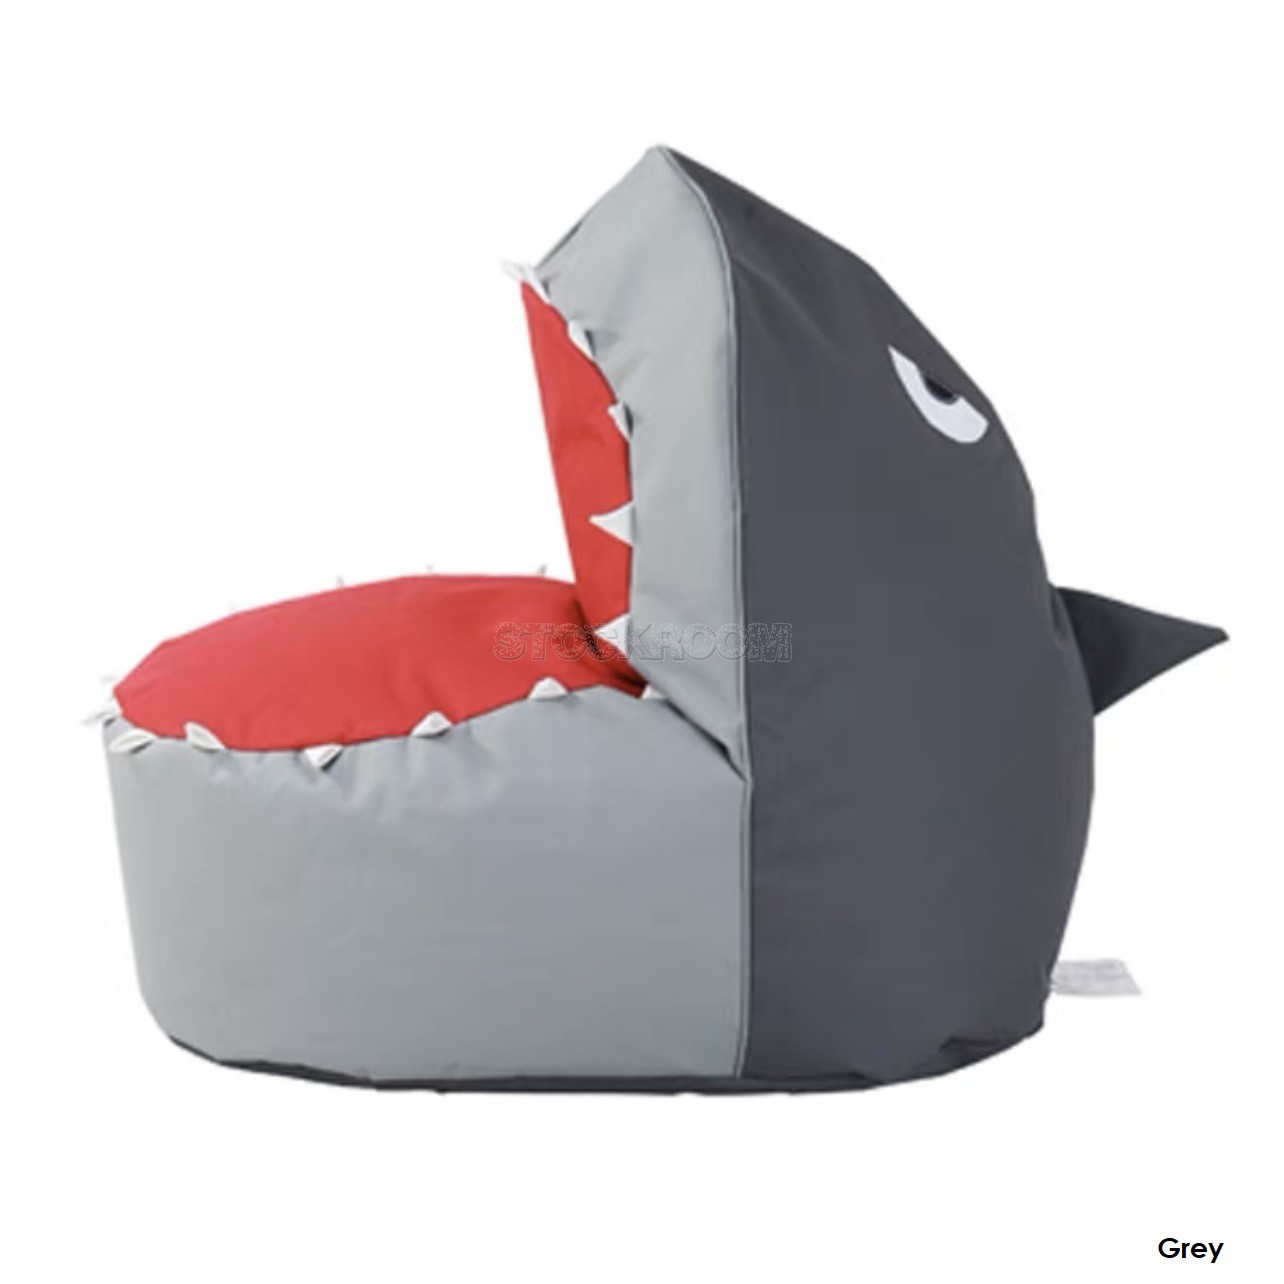 Shark Bean Bag Chair for Kids